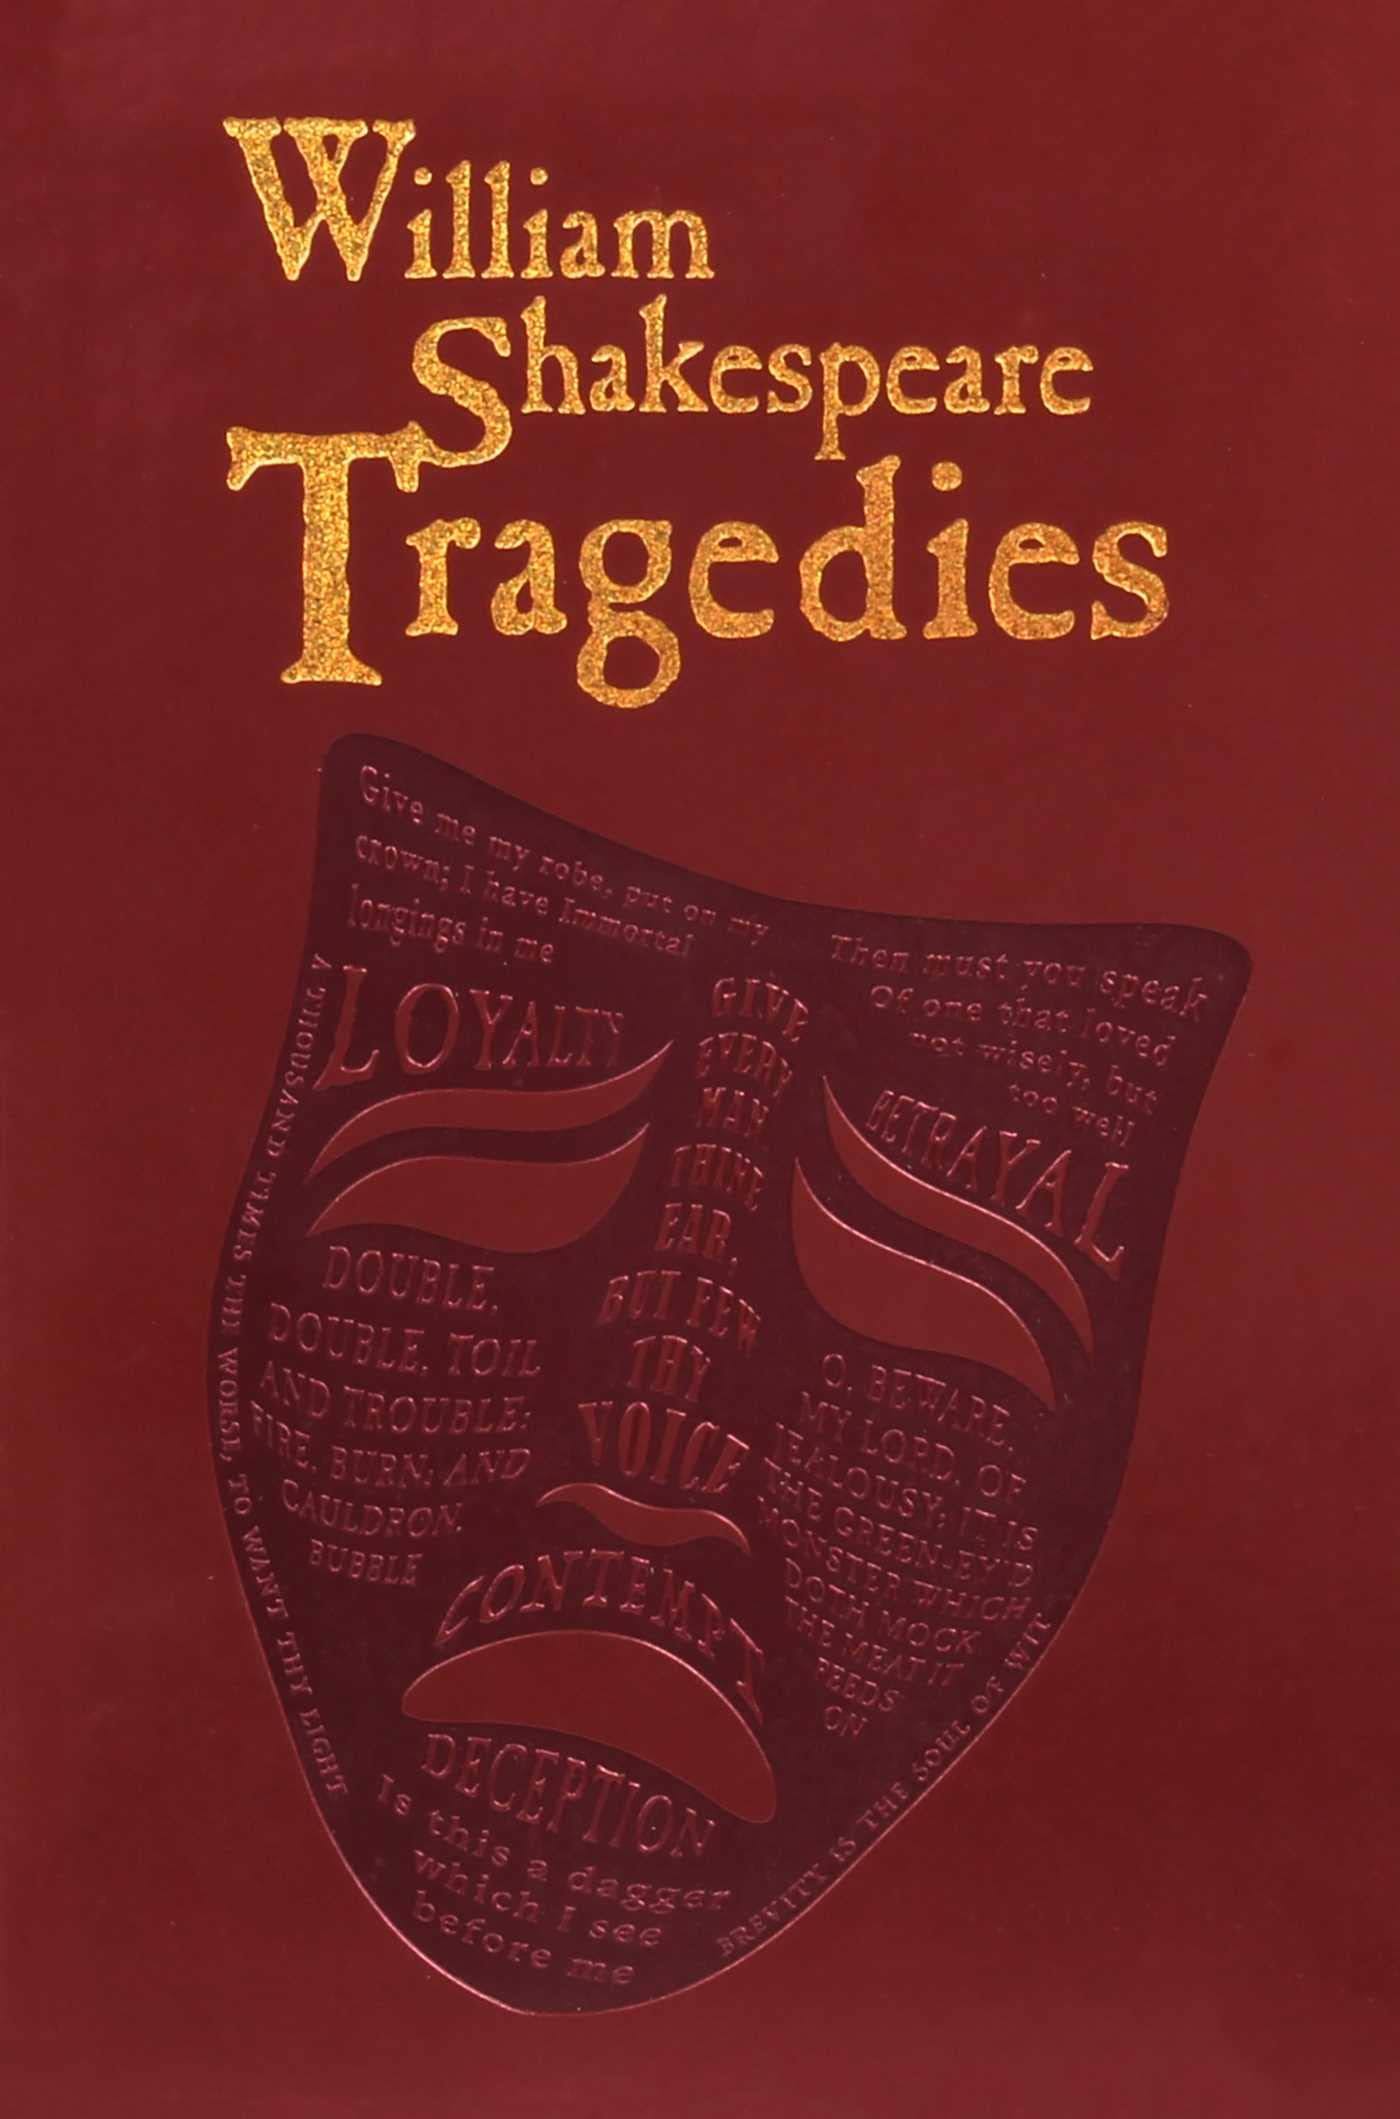 William Shakespeare Tragedies [Book]